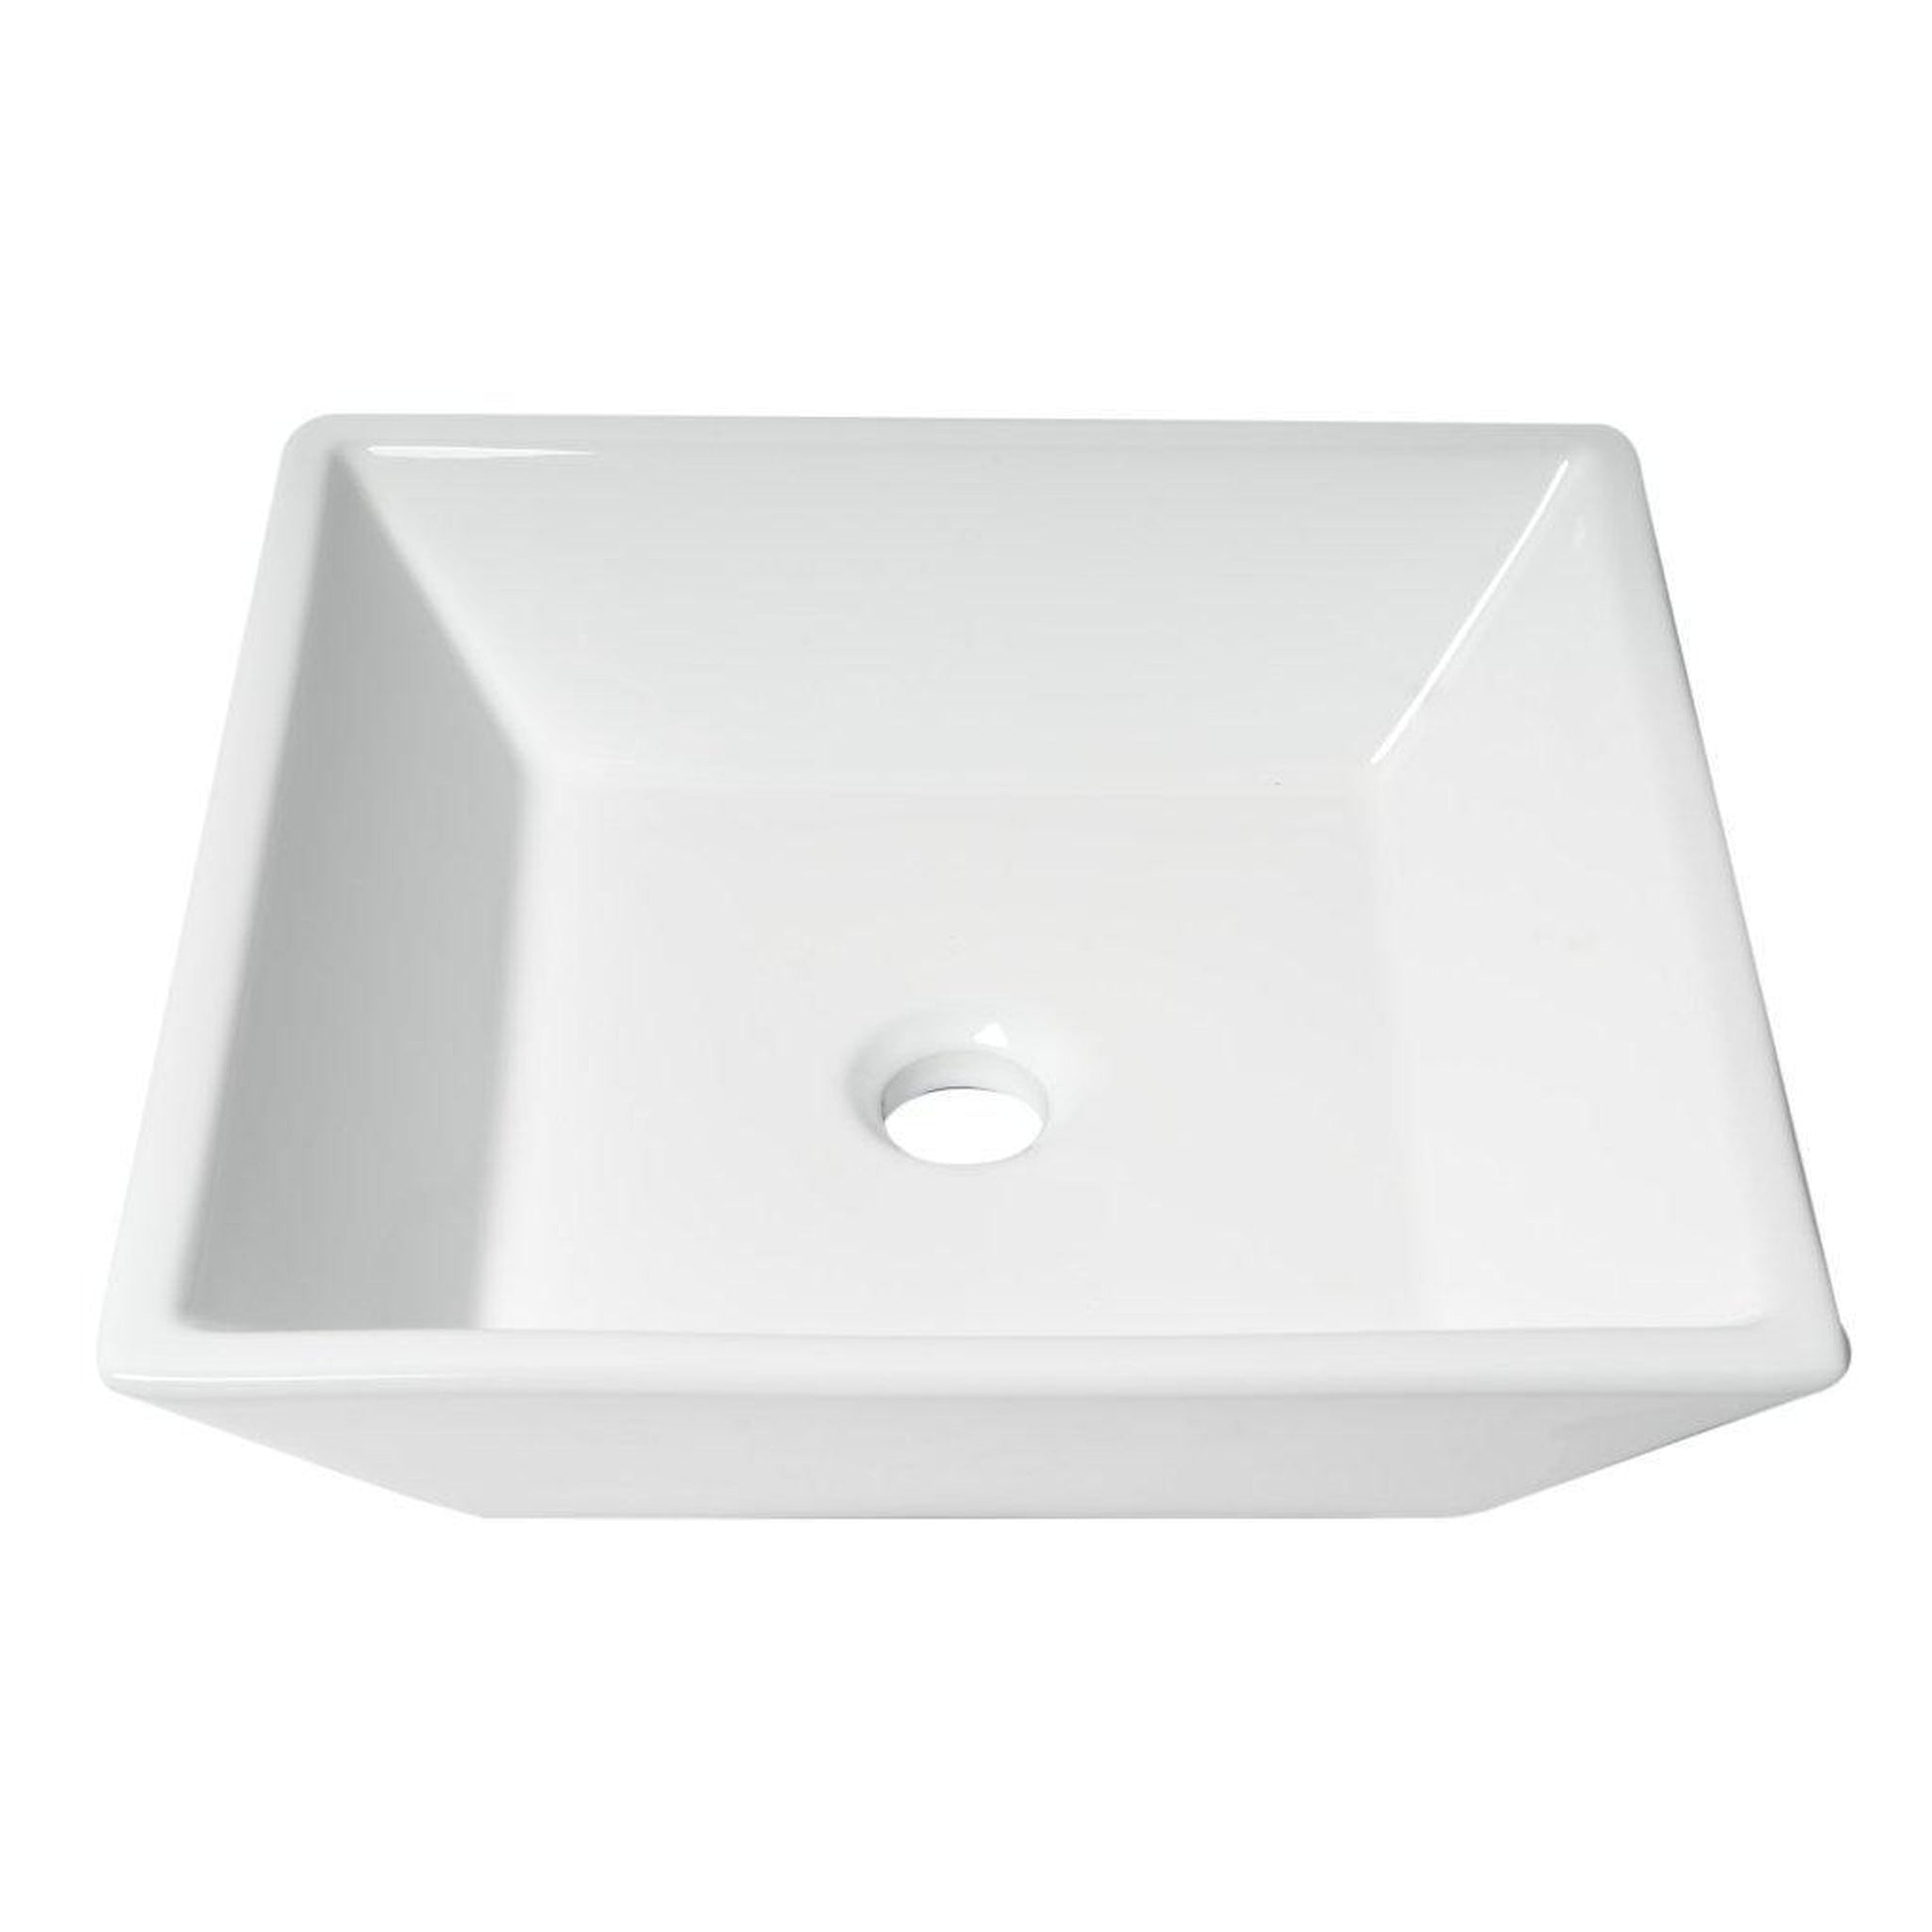 ALFI Brand ABC912 17" White Above Mount Square Ceramic Bathroom Sink